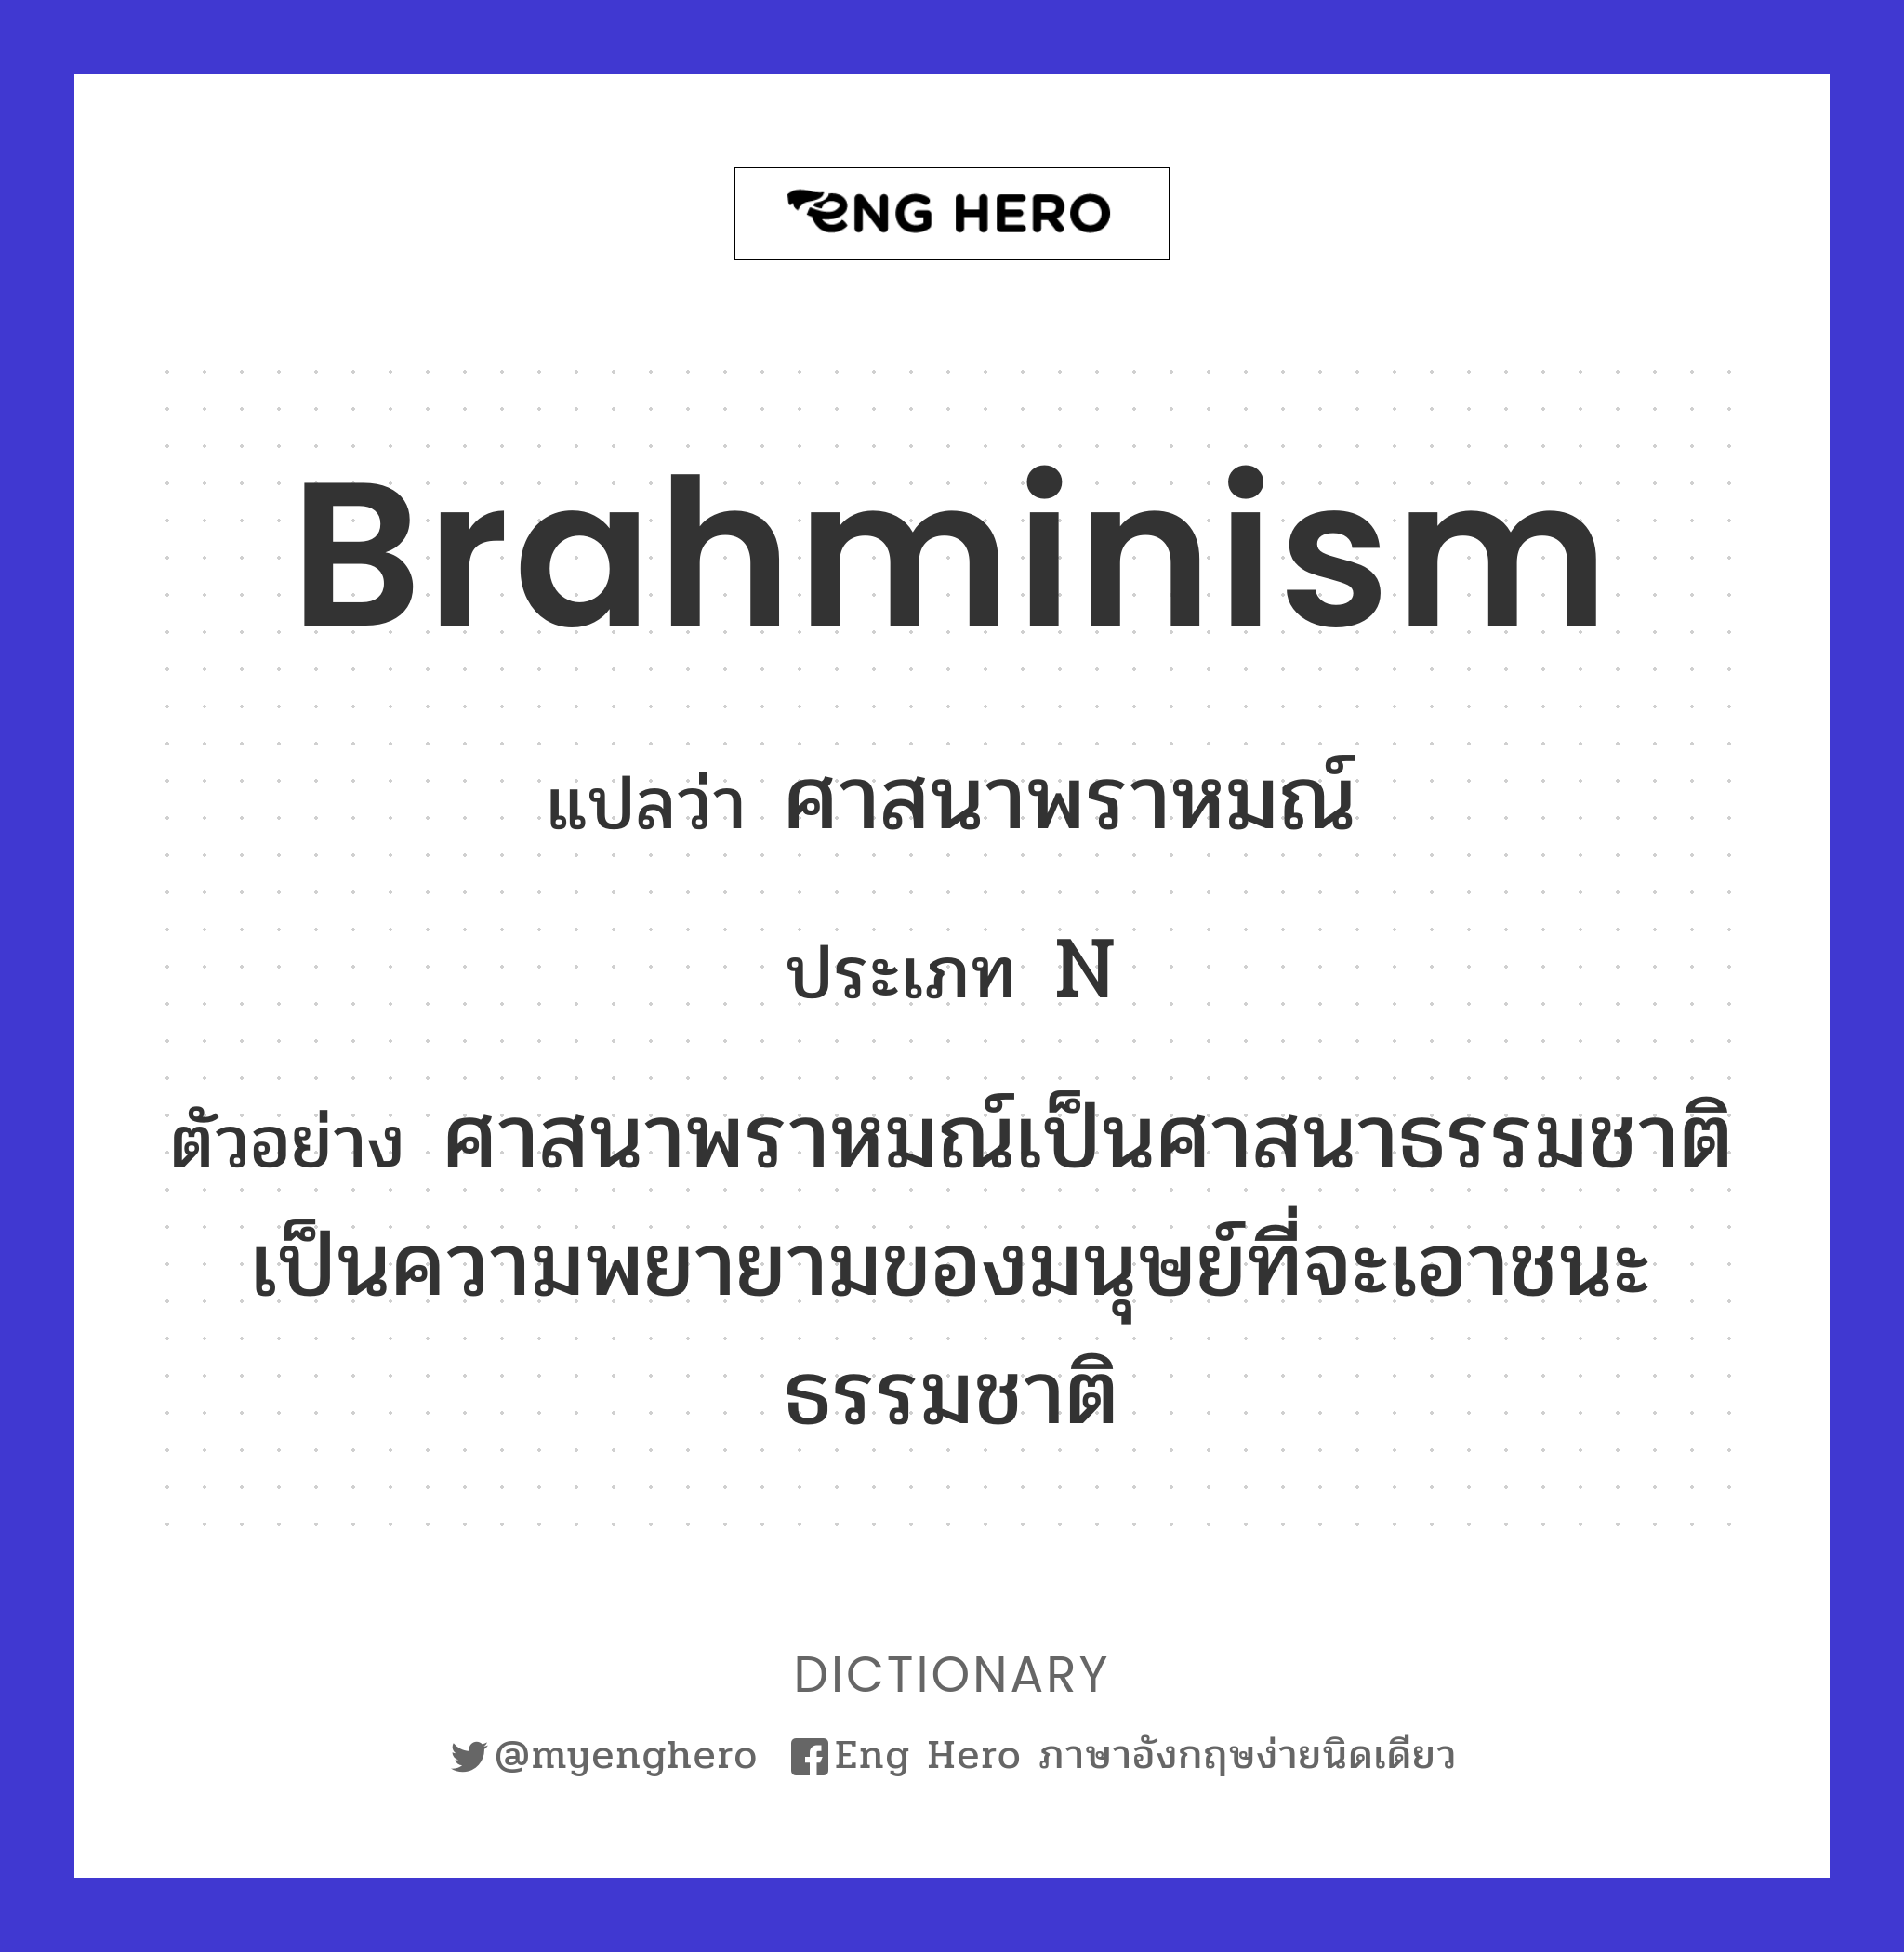 Brahminism